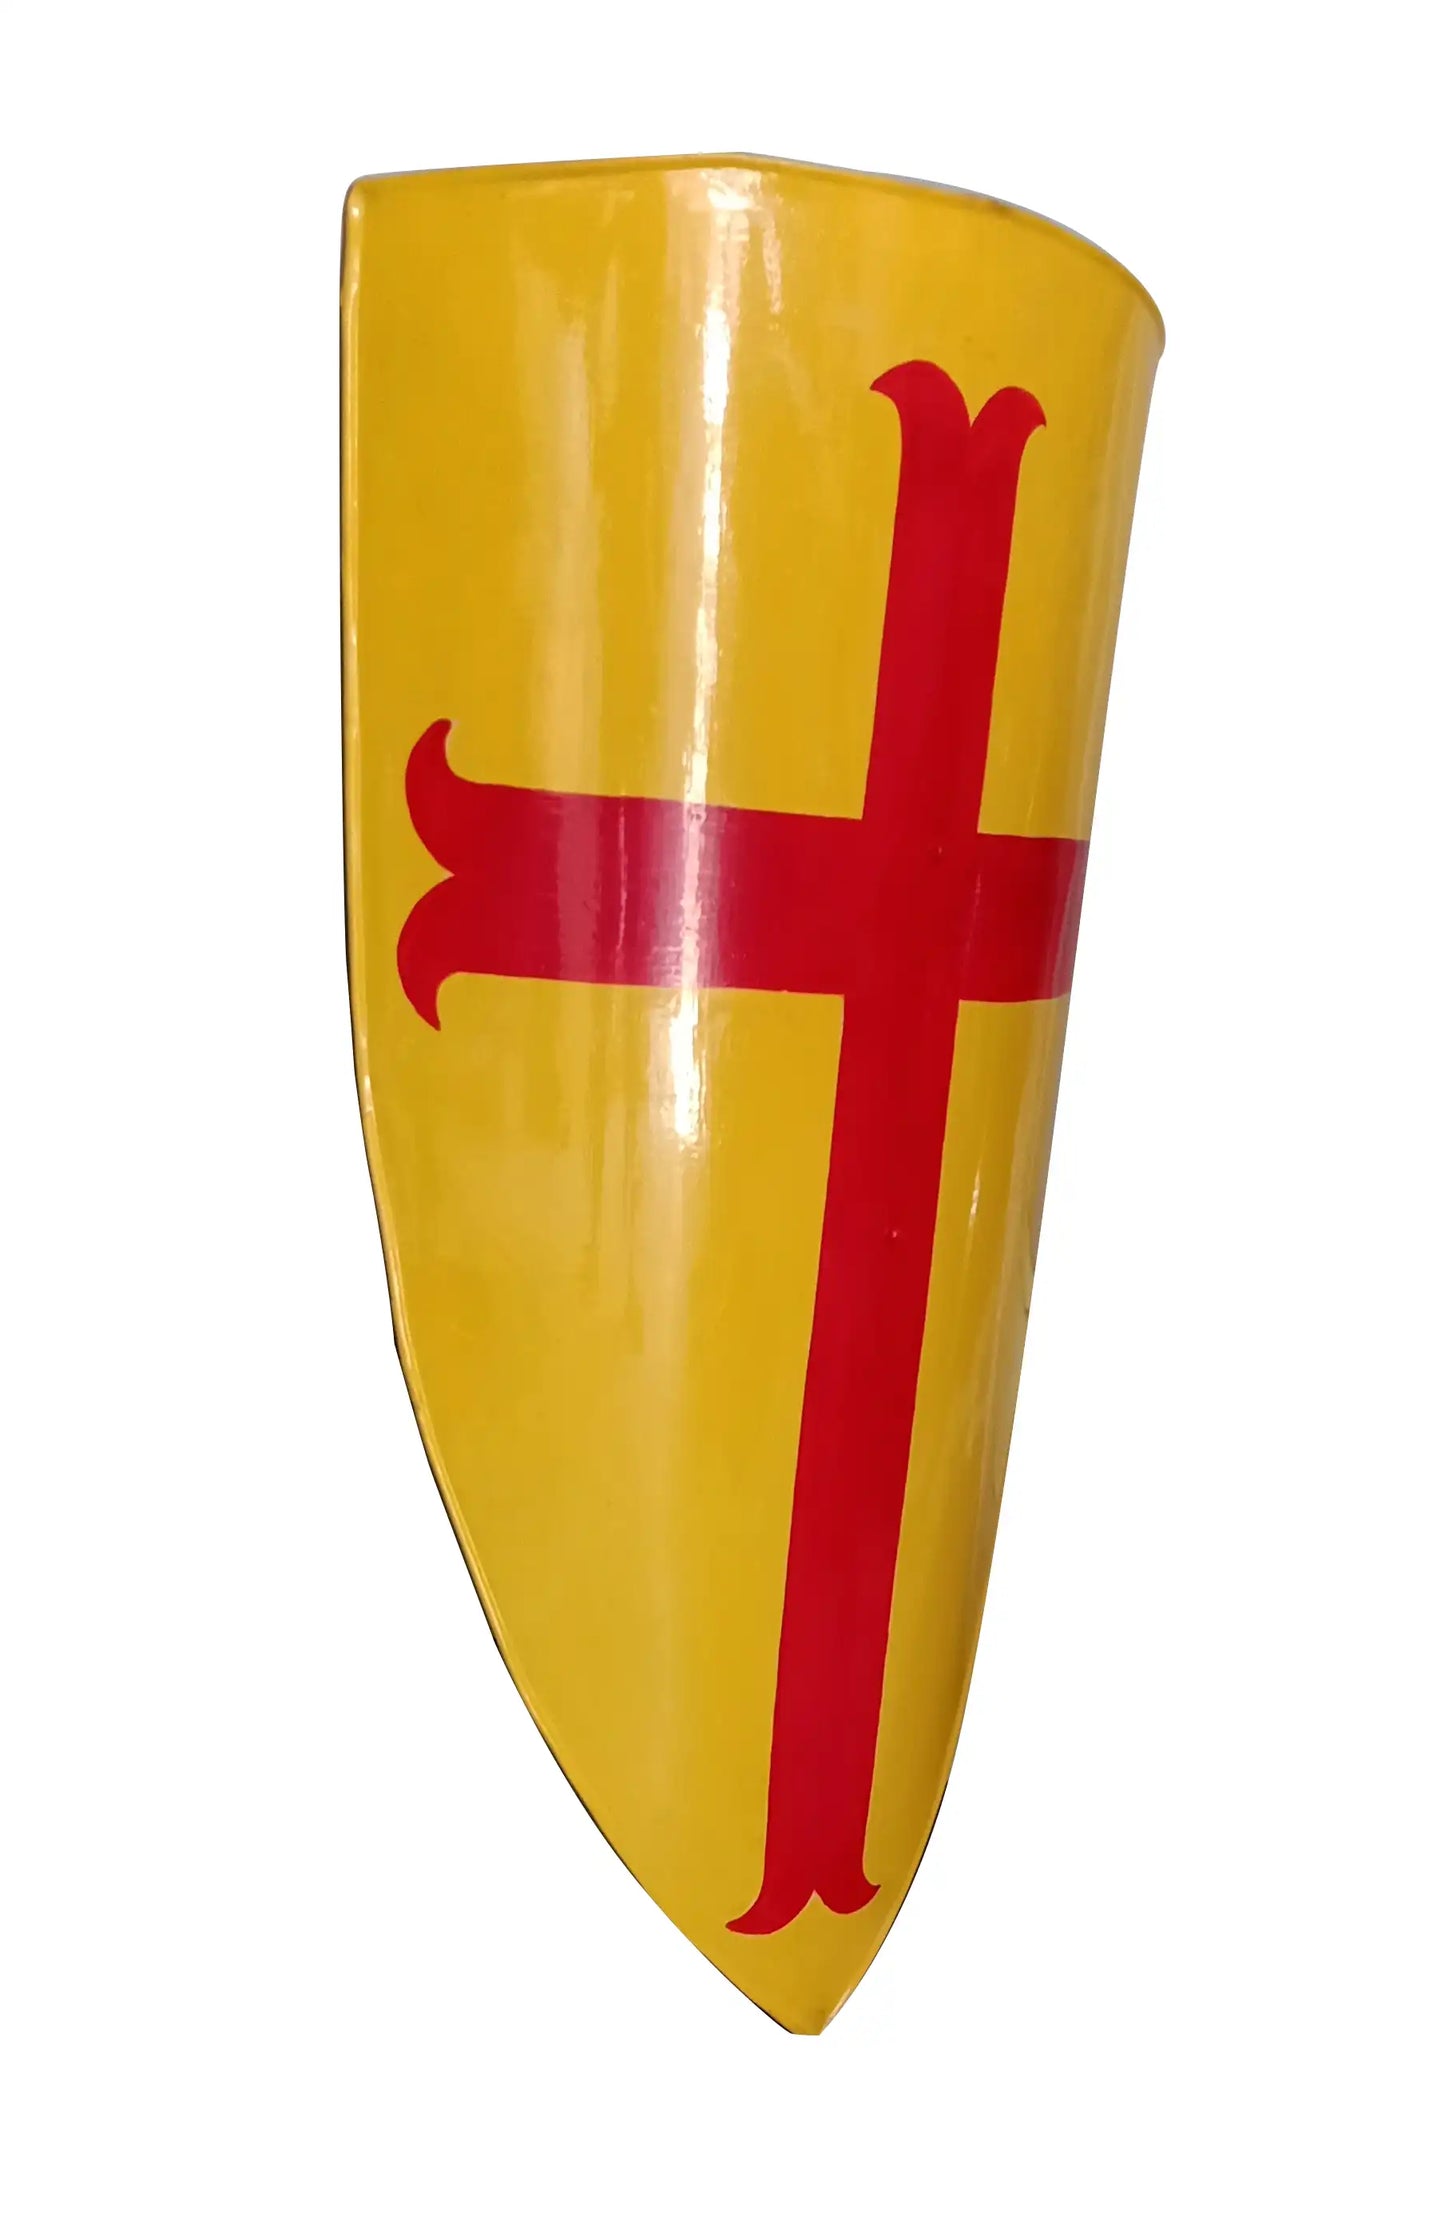 Medieval Red Cross Crusader Yellow Templar Knight Shield